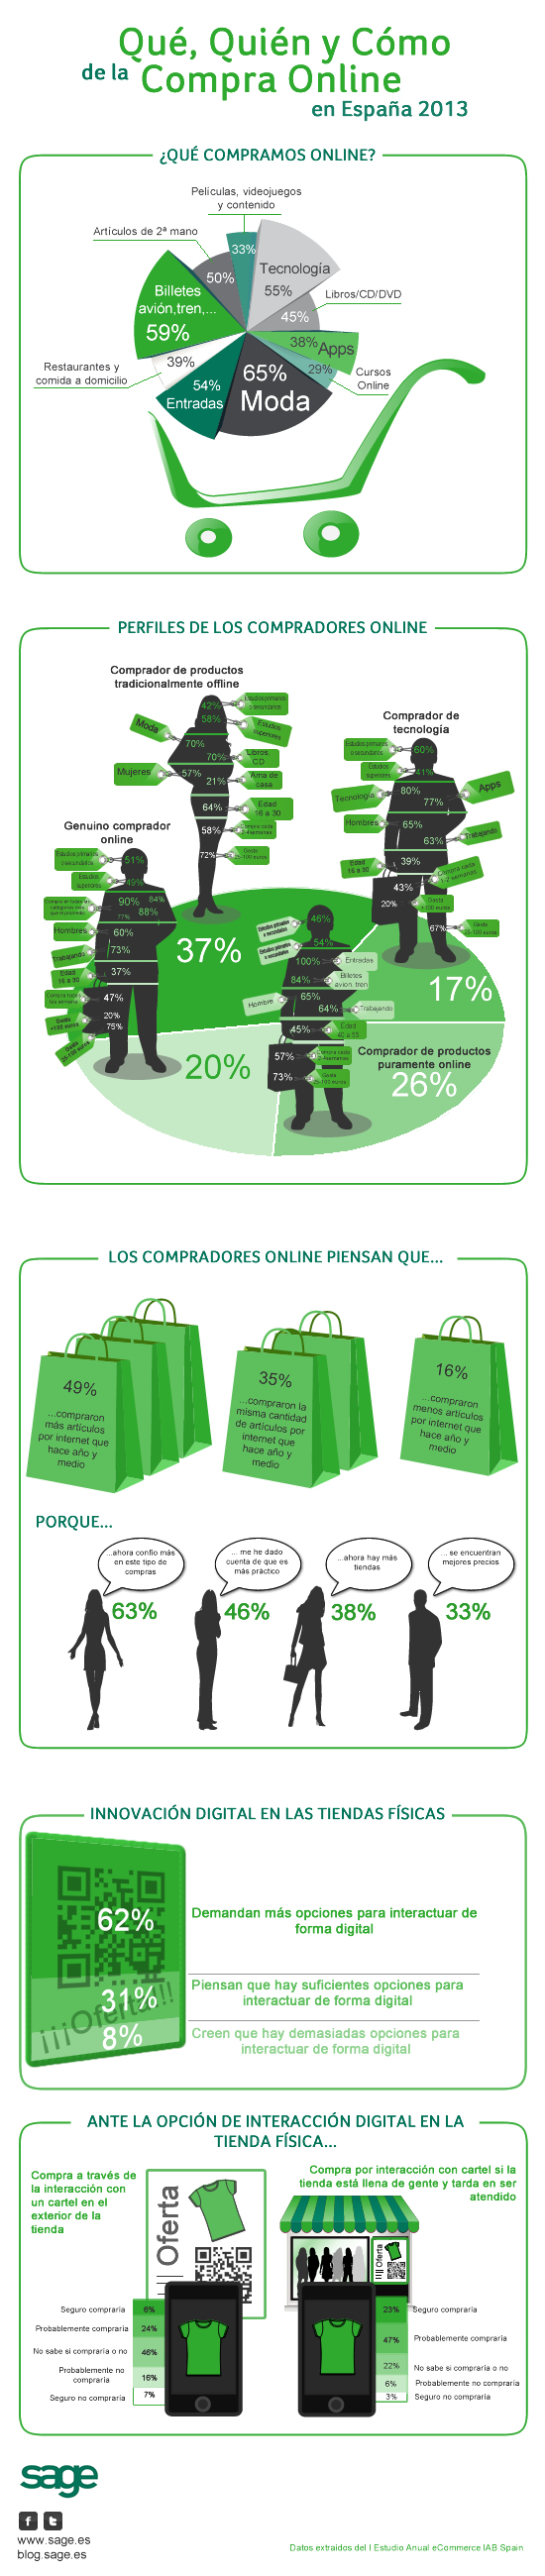 Infografia-compra-online2013